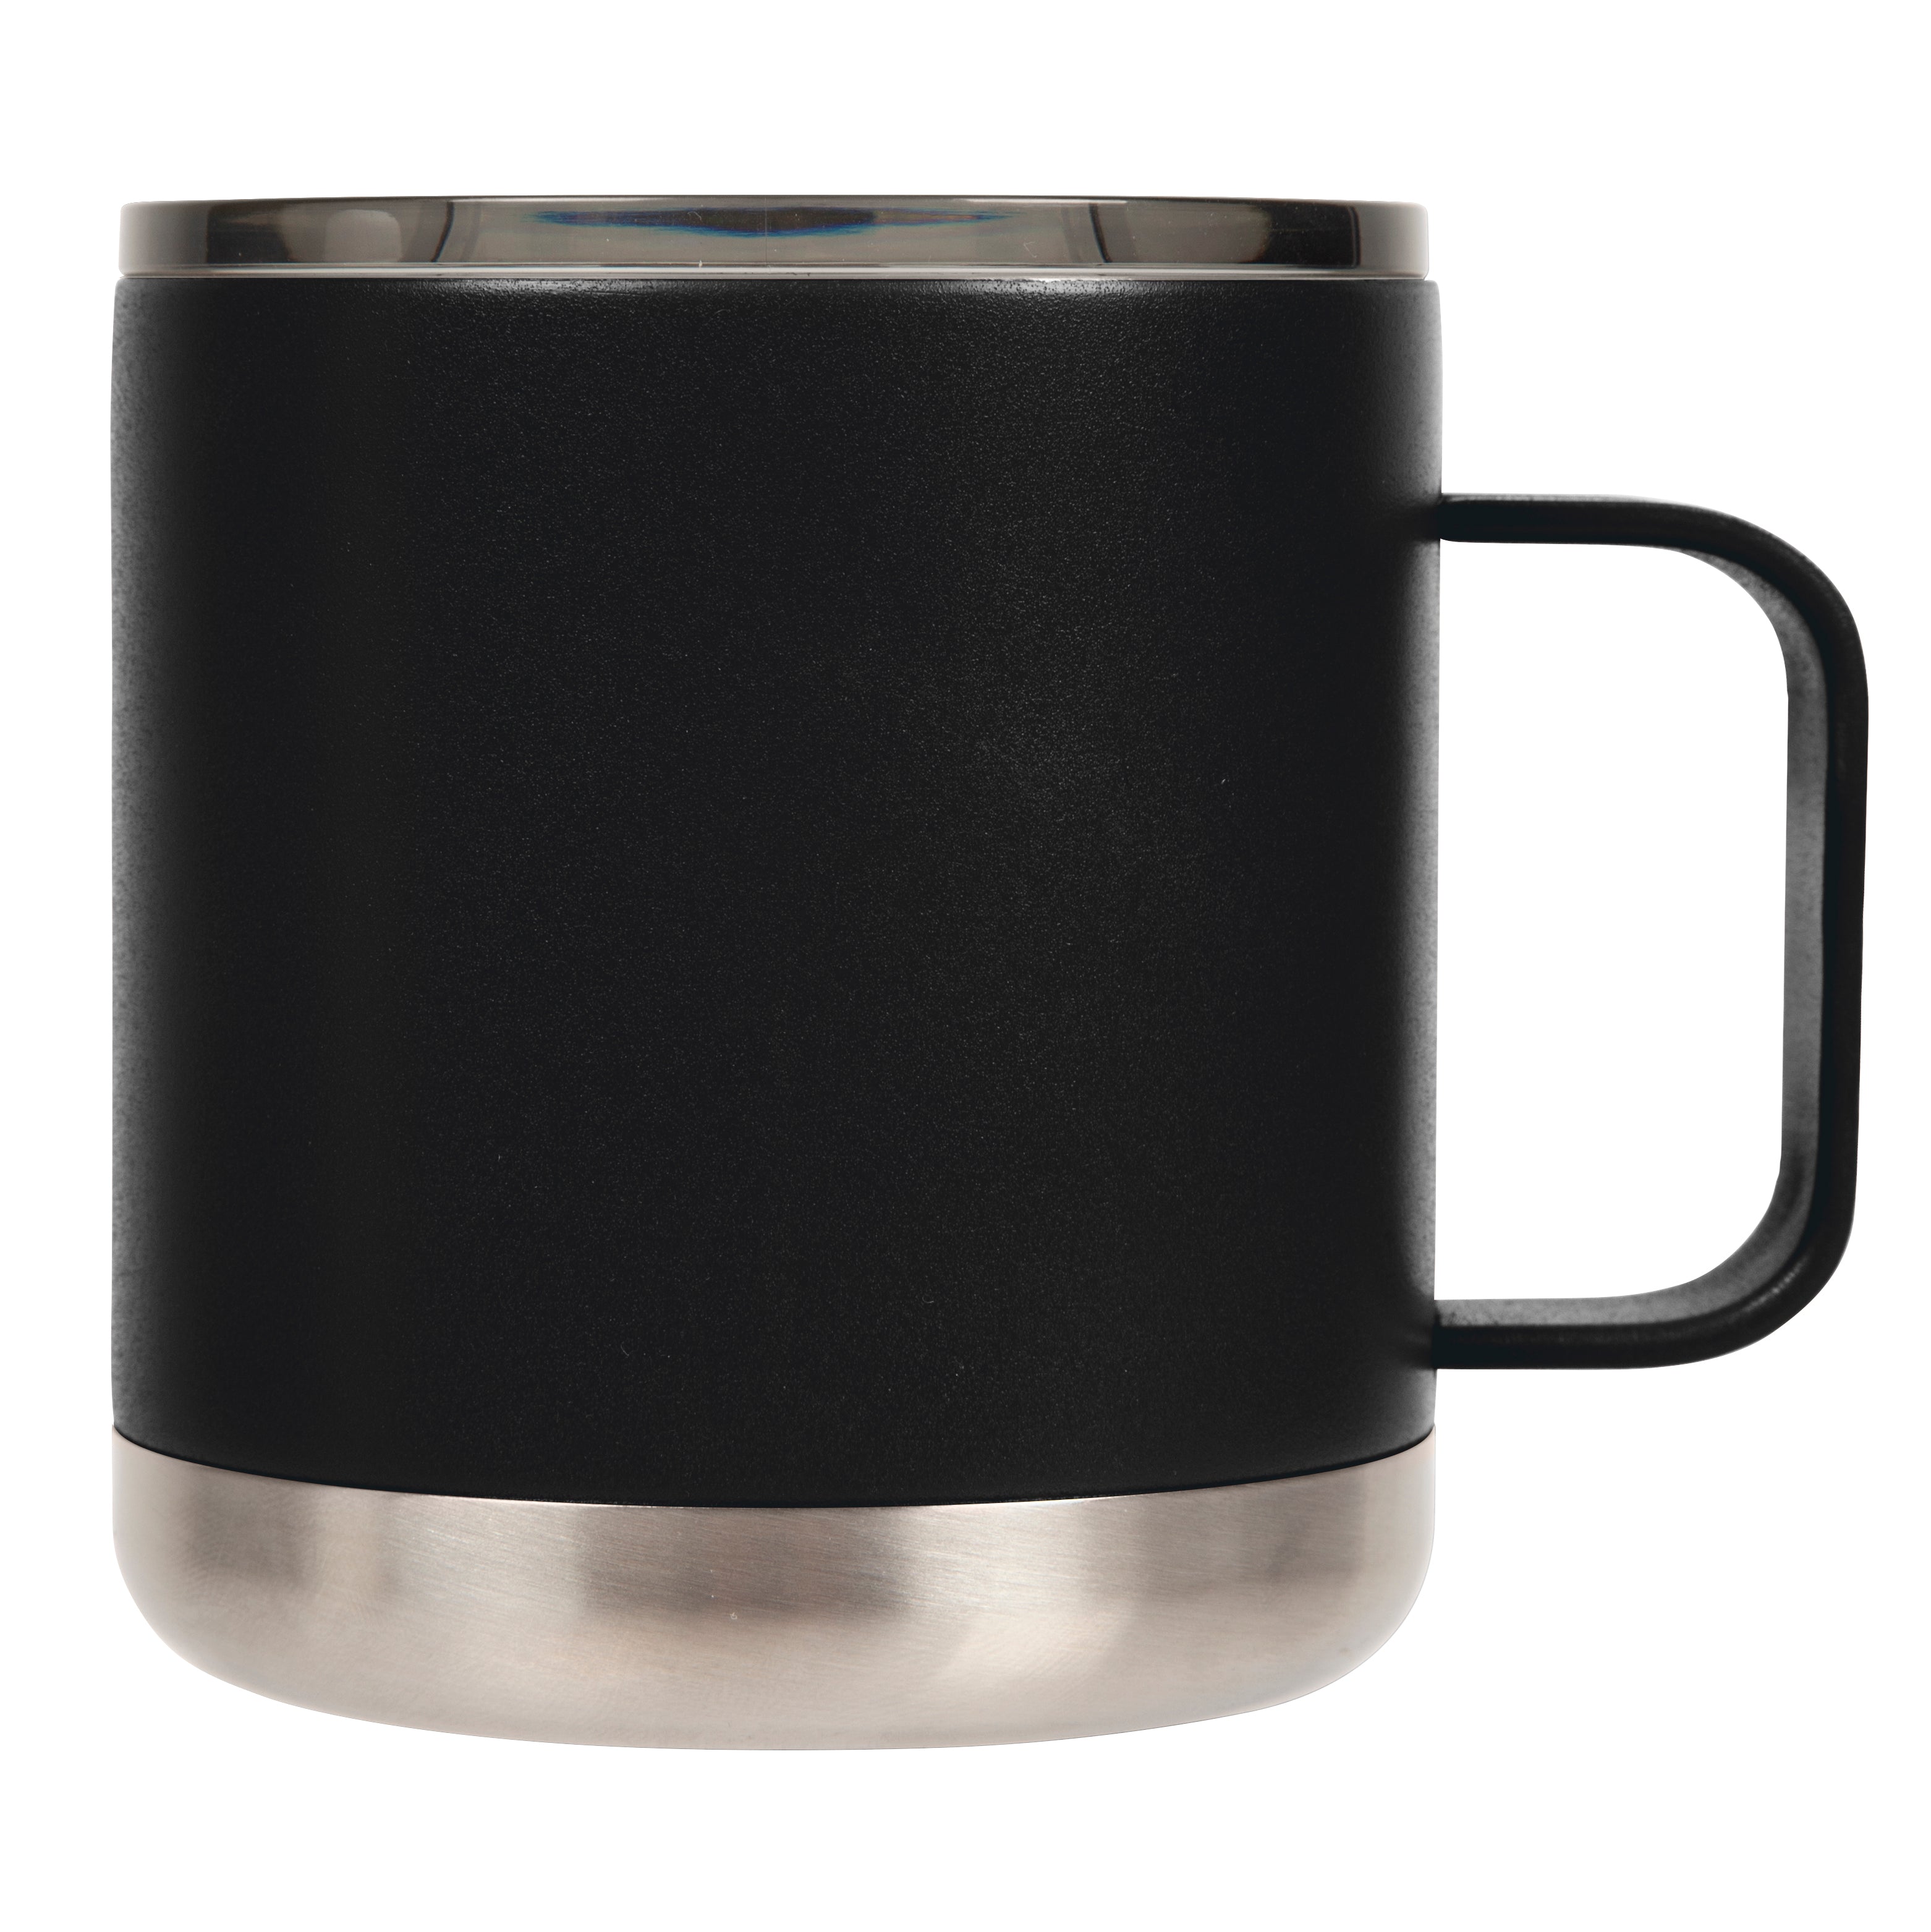 All is Swell' Coffee/Tea Mug 15 oz